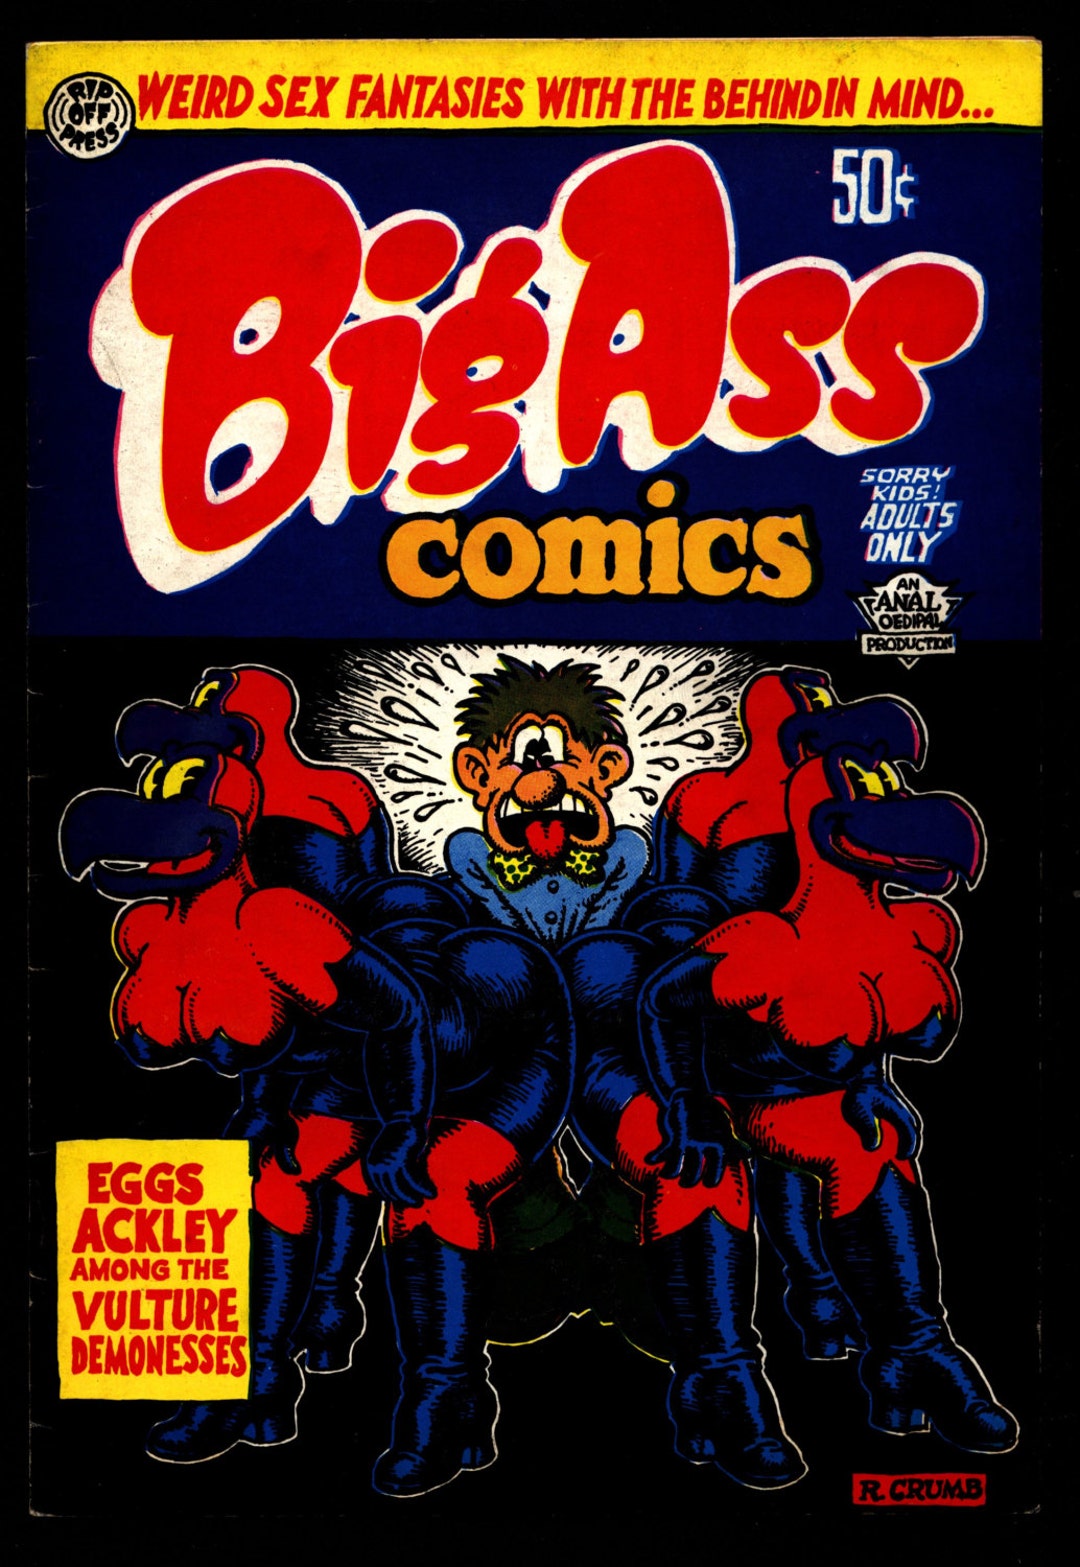 BIG ASS Comics 1 5th Robert Crumb Weird Sex Fantasy Humor image